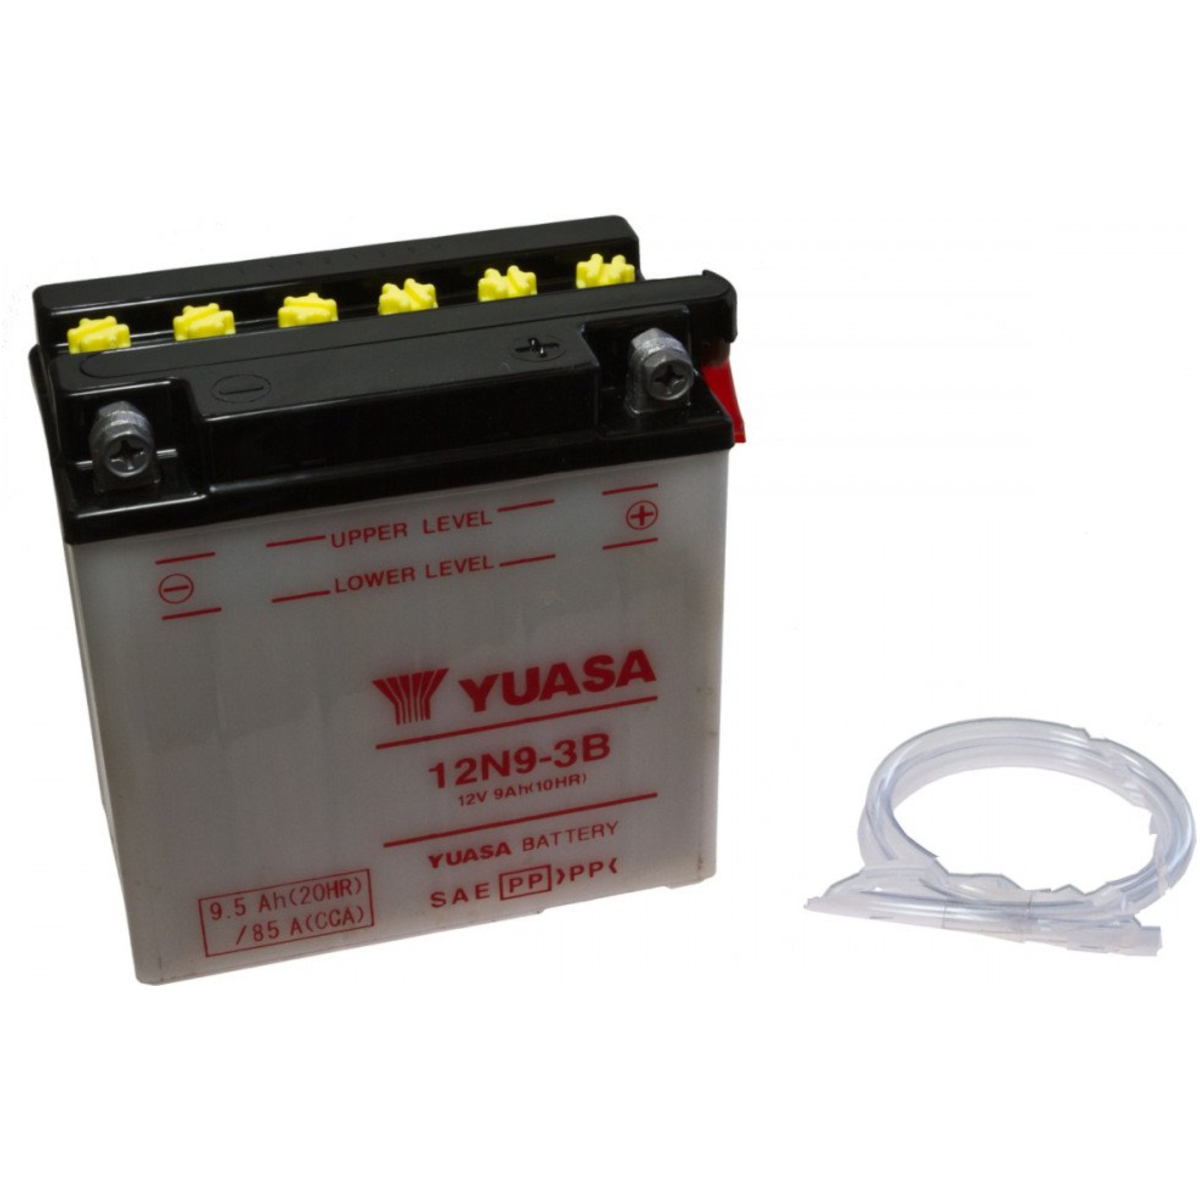 Yuasa 12n9-3b(dc) motorradbatterie 12n9-3b von Yuasa